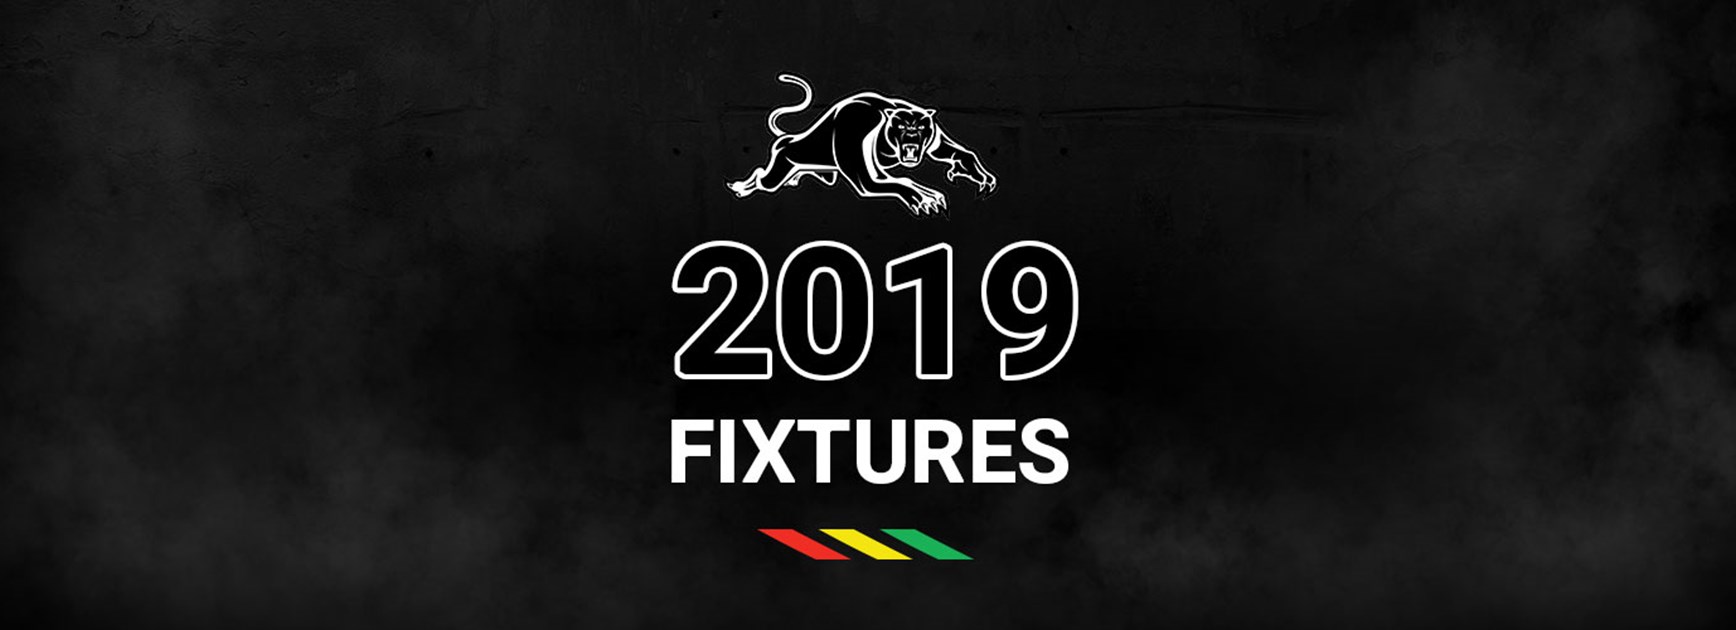 2019 NRL Draw revealed